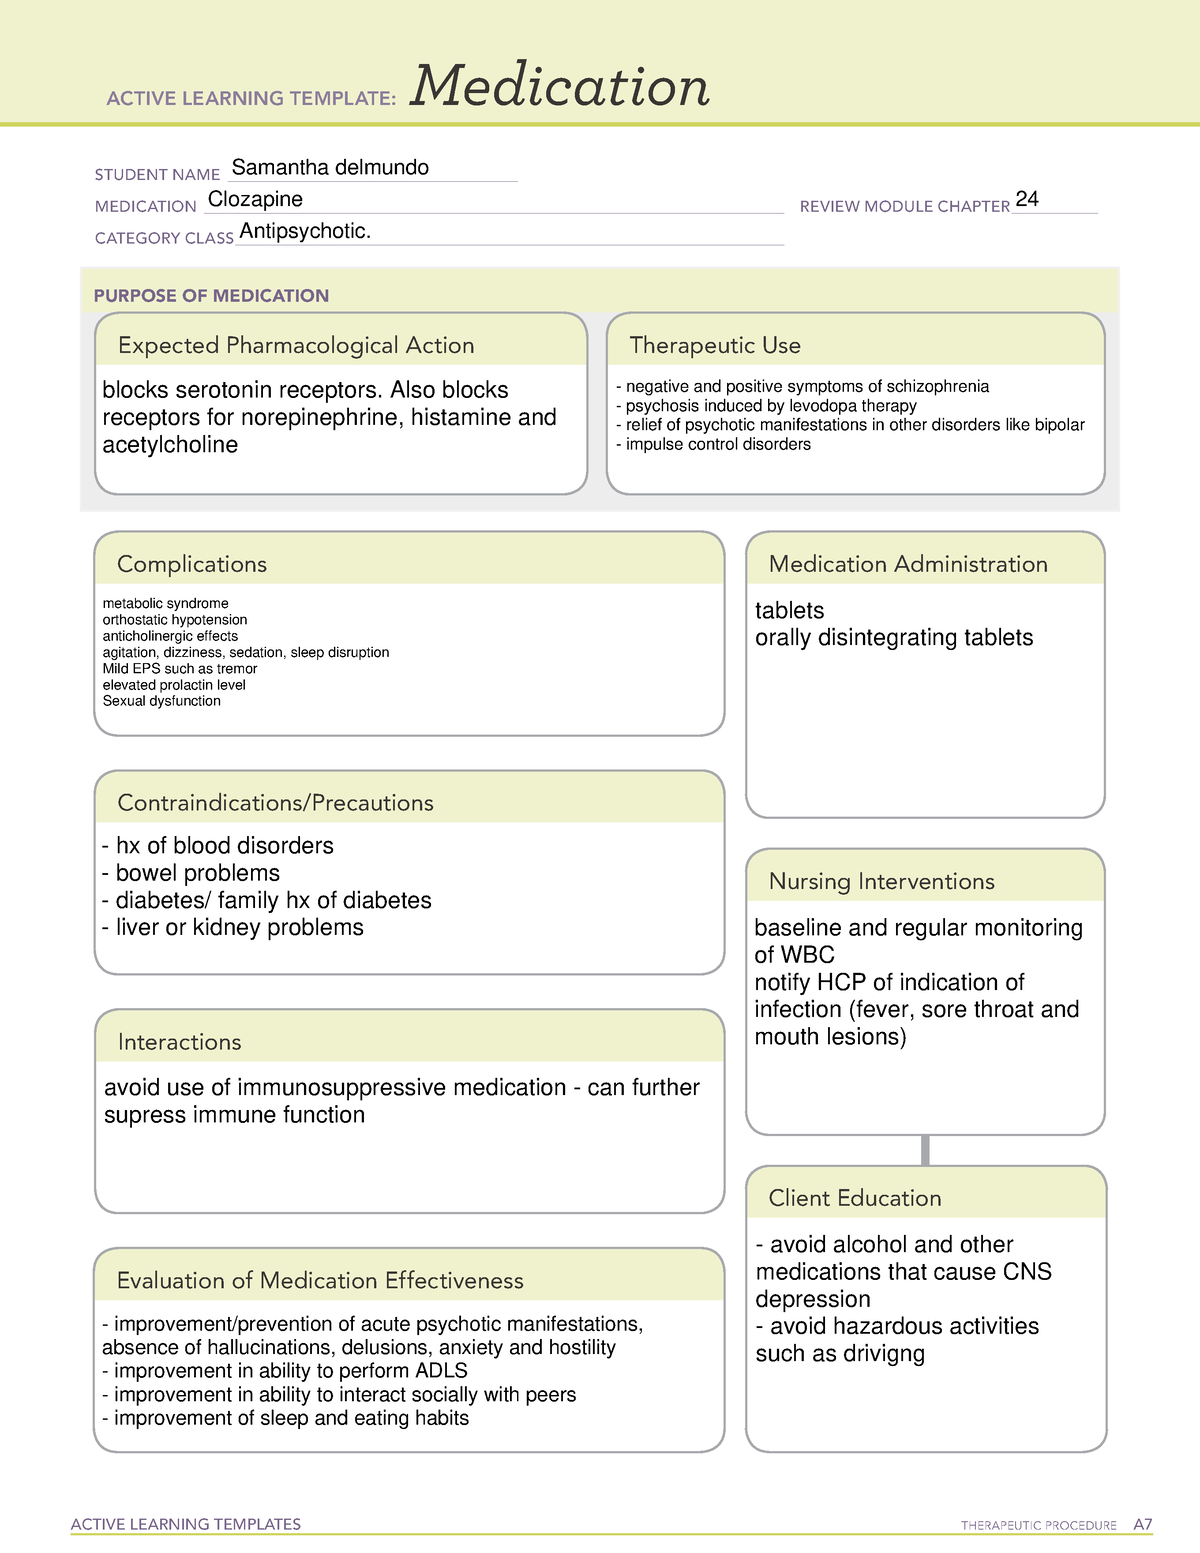 clozapine-medication-template